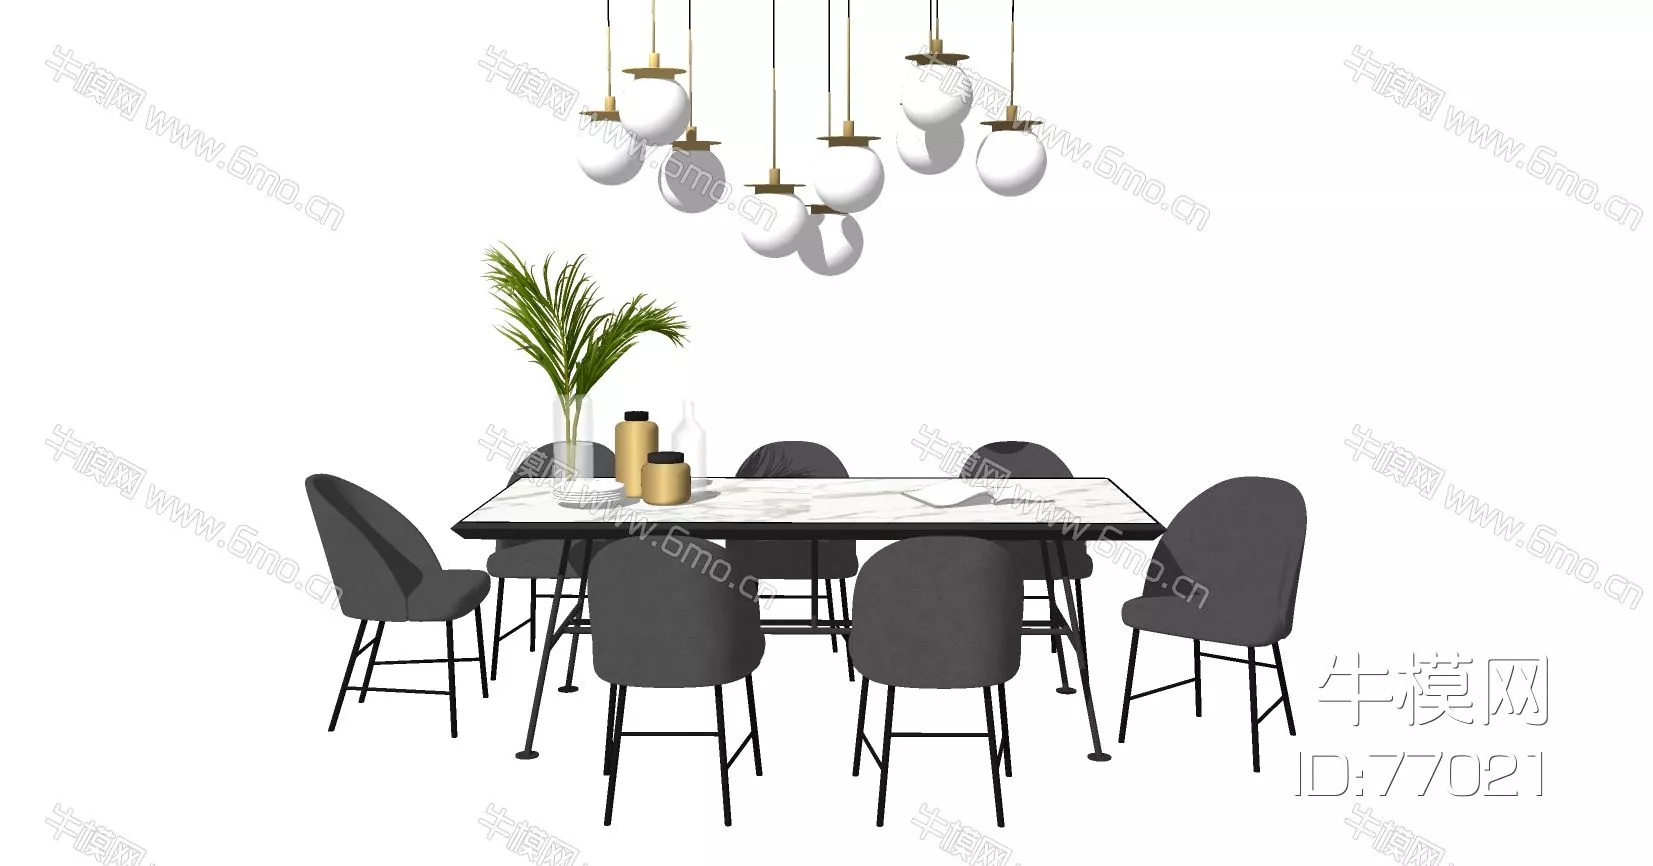 NORDIC DINING TABLE SET - SKETCHUP 3D MODEL - ENSCAPE - 77021